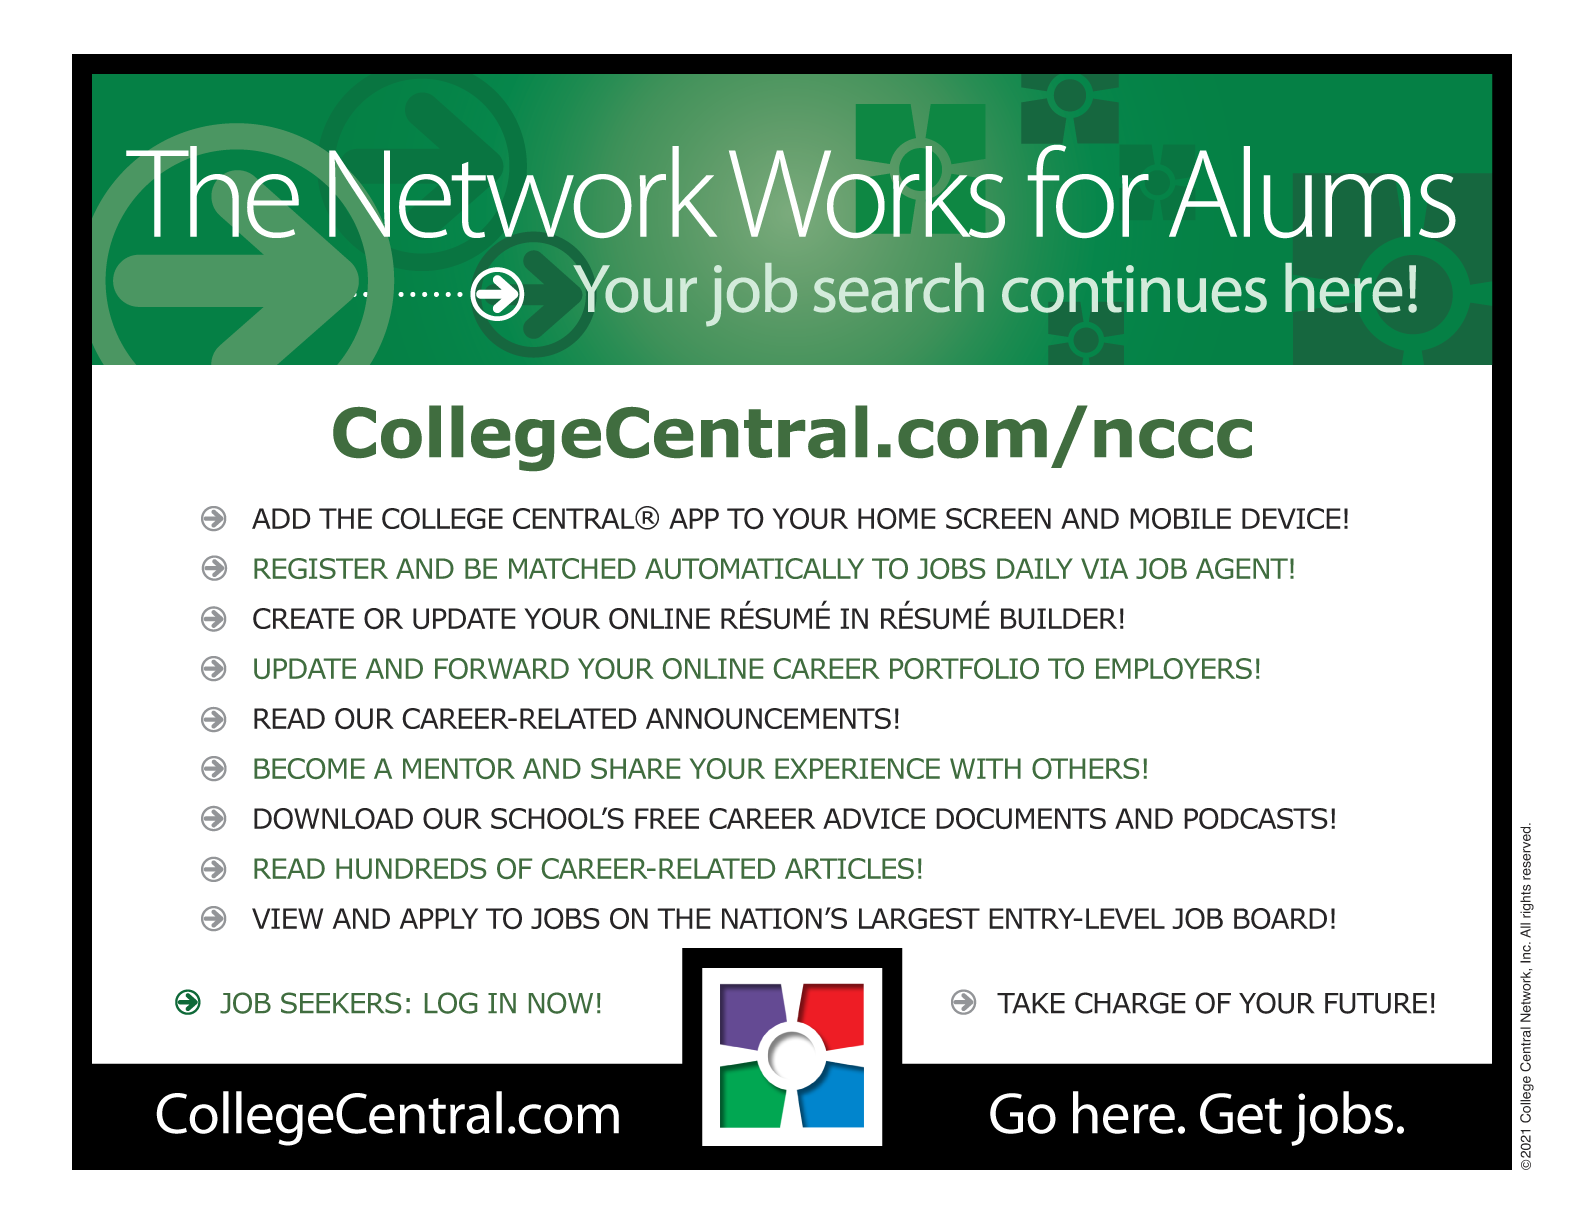 College Central Network flyer for alumni